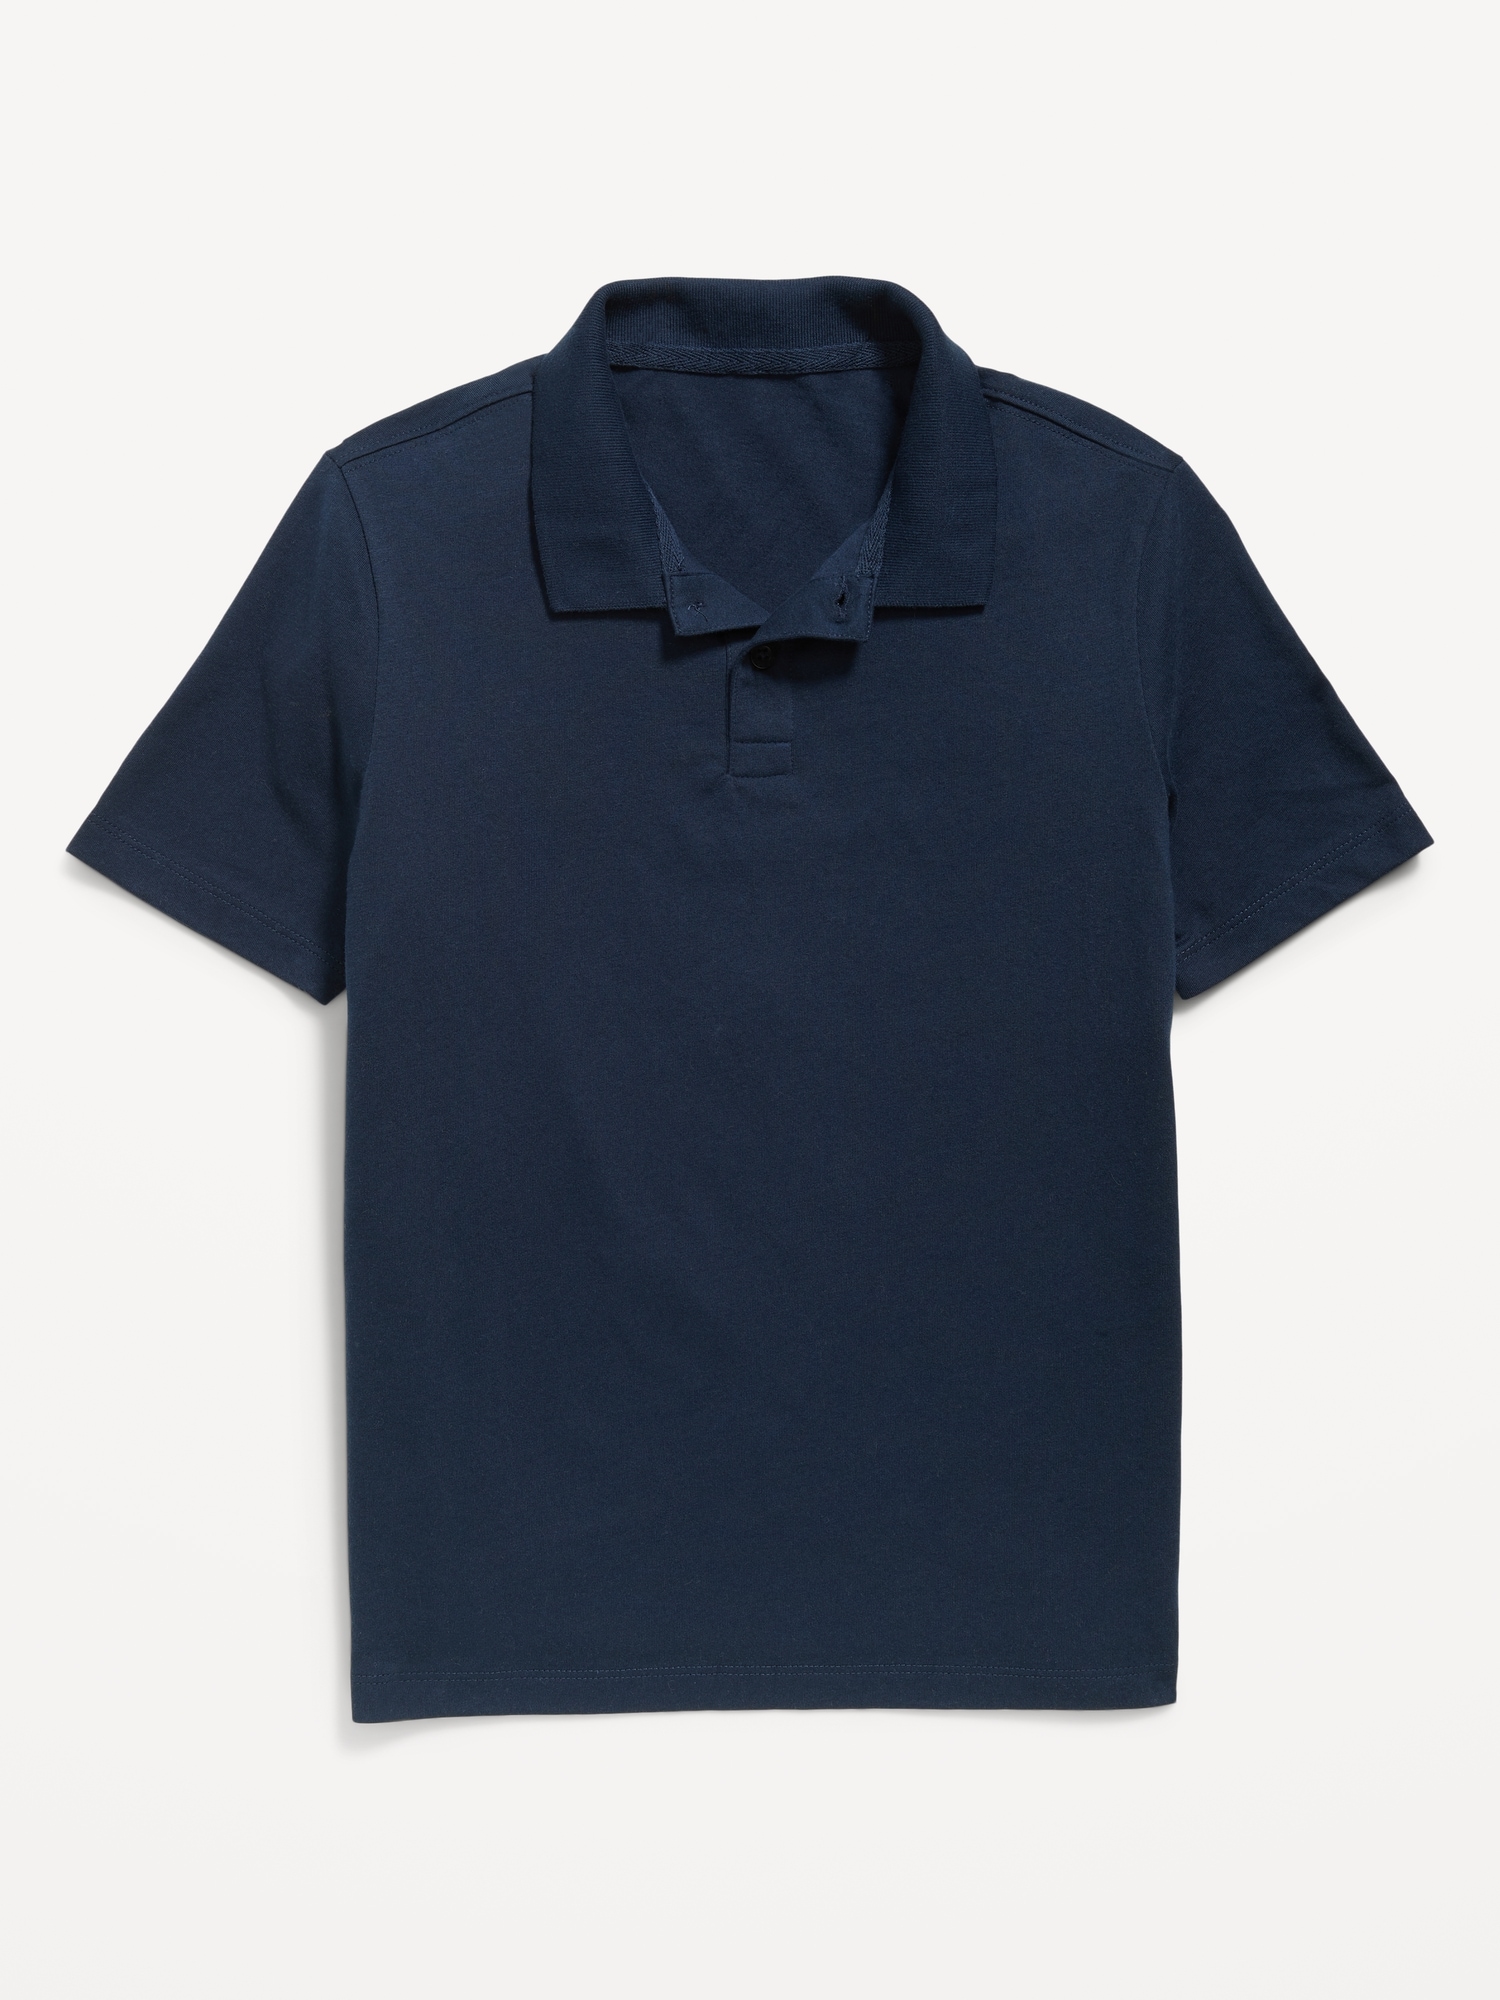 School Uniform Jersey-Knit Polo Shirt for Boys | Old Navy